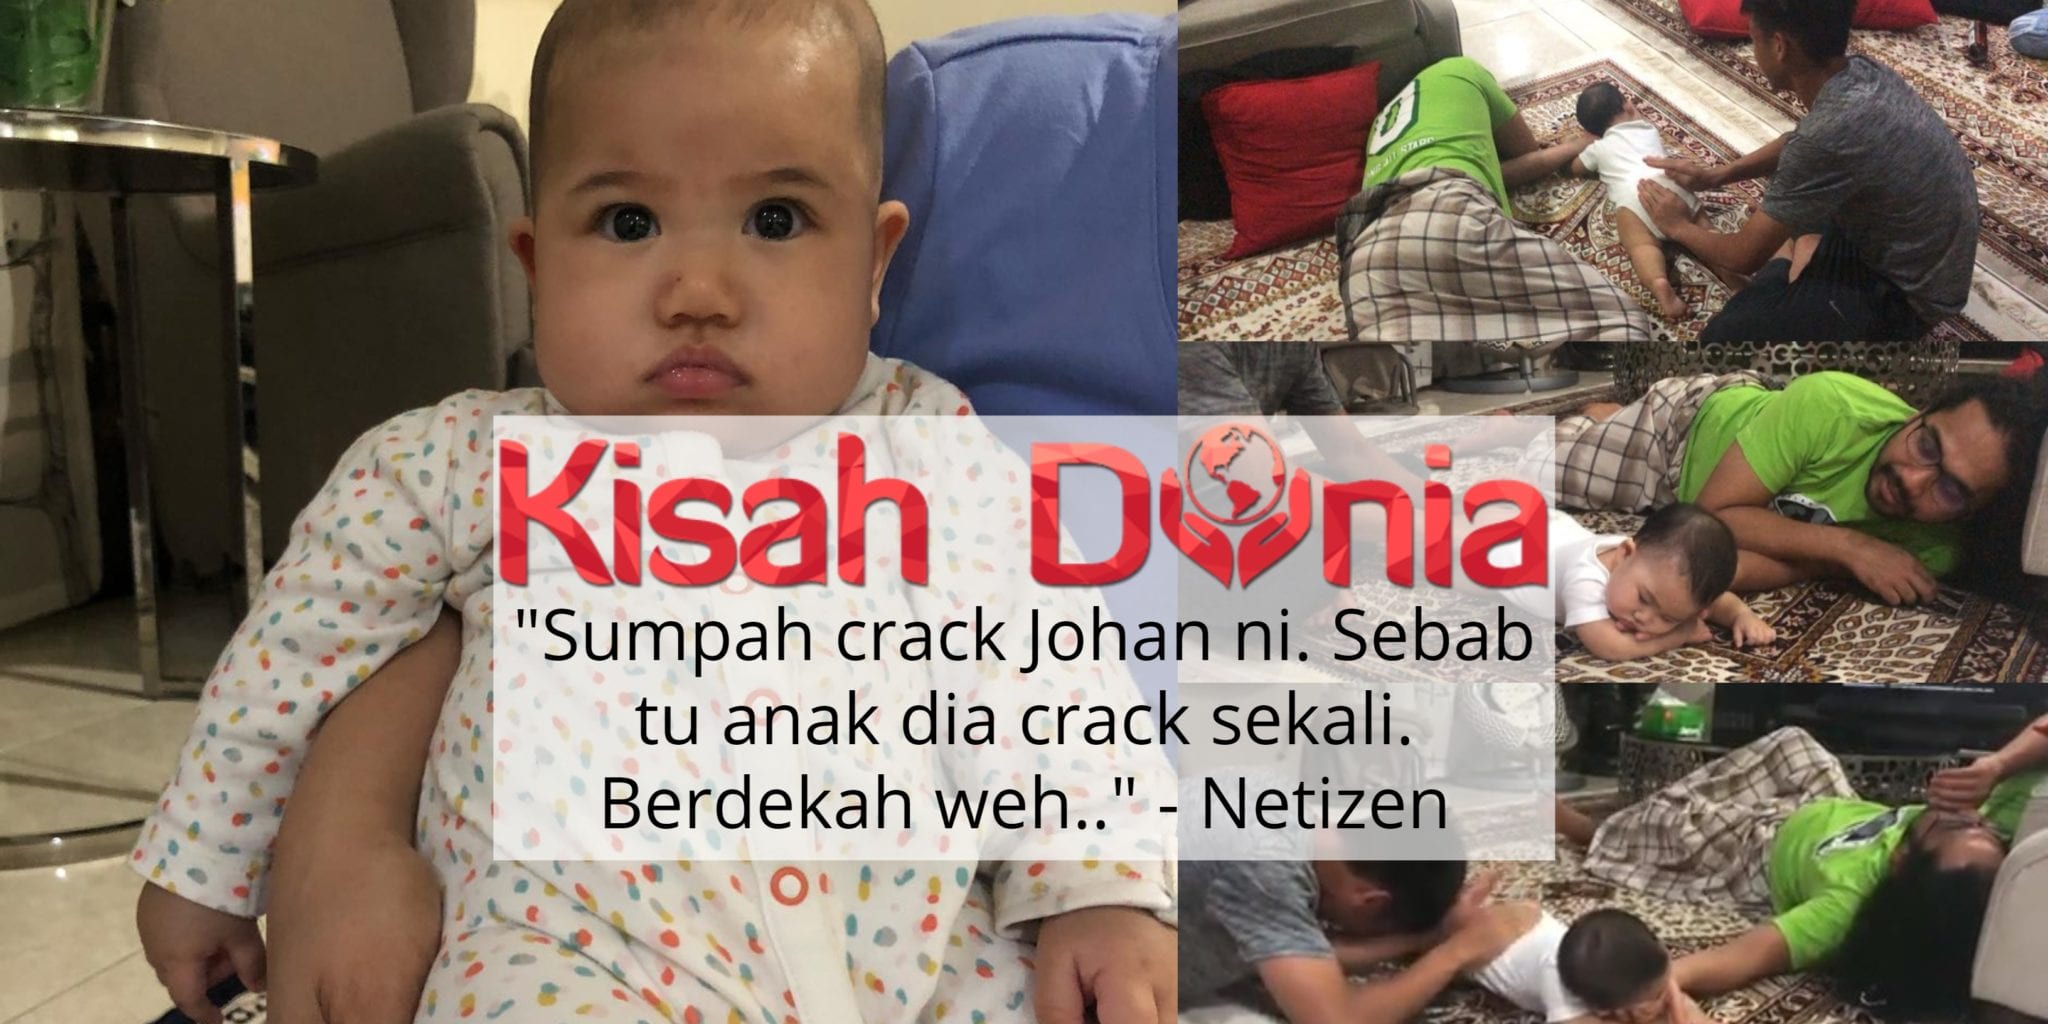 [VIDEO] "Ingat Anak Aku Drum?" - BuIi Baby Tidur, Ini Reaksi Ozlynn Pada Johan! 7